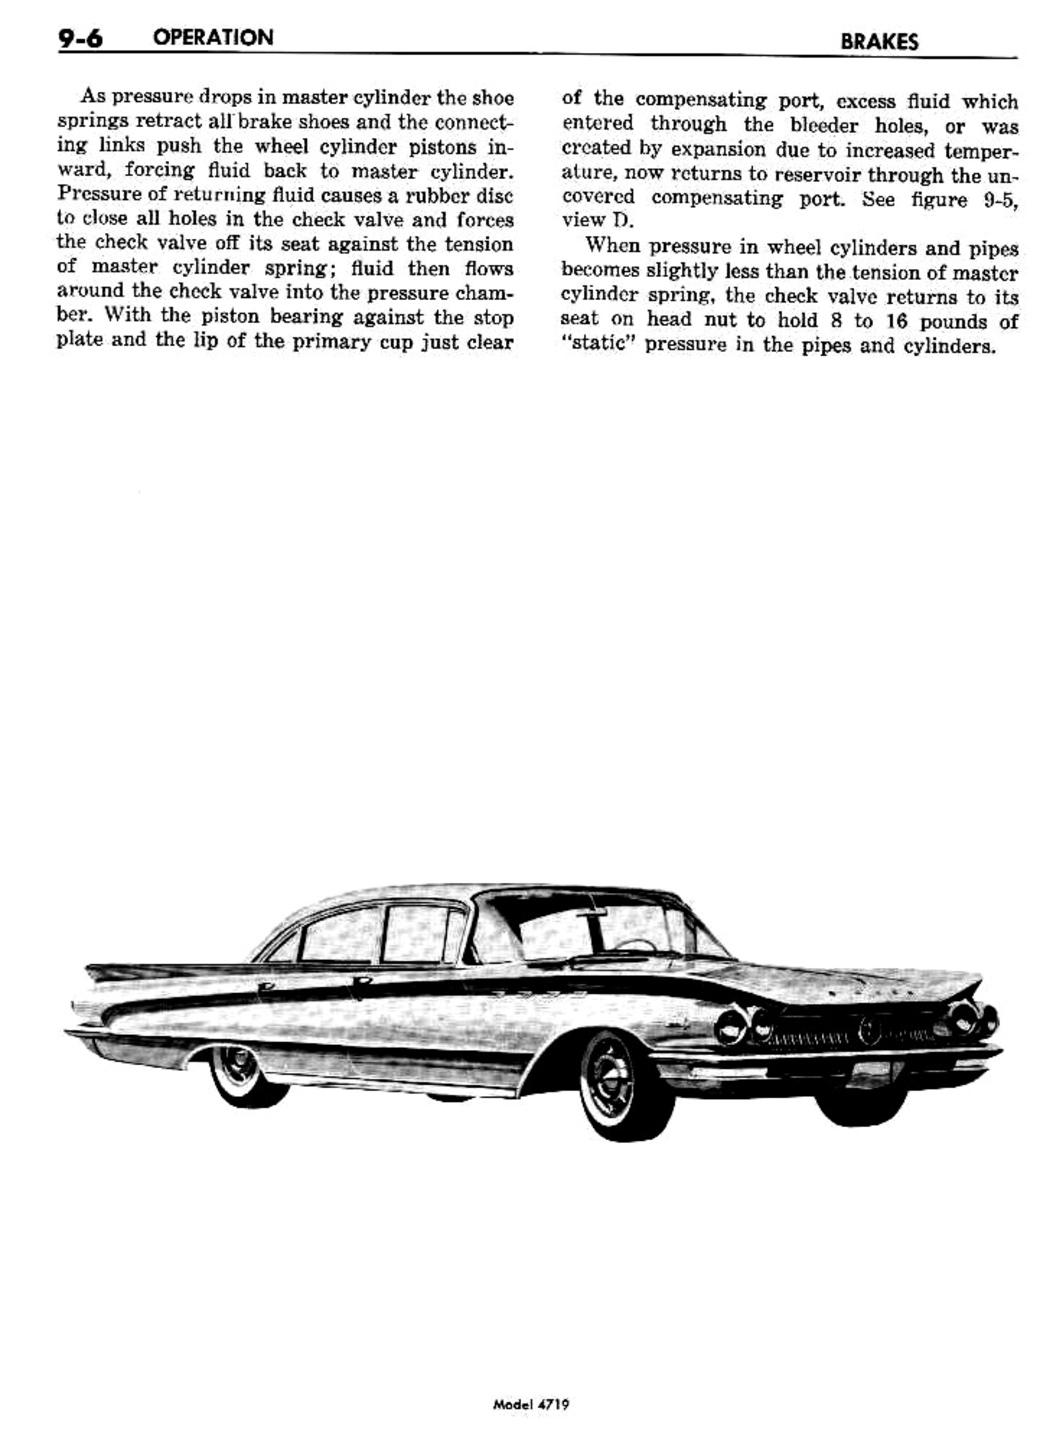 n_10 1960 Buick Shop Manual - Brakes-006-006.jpg